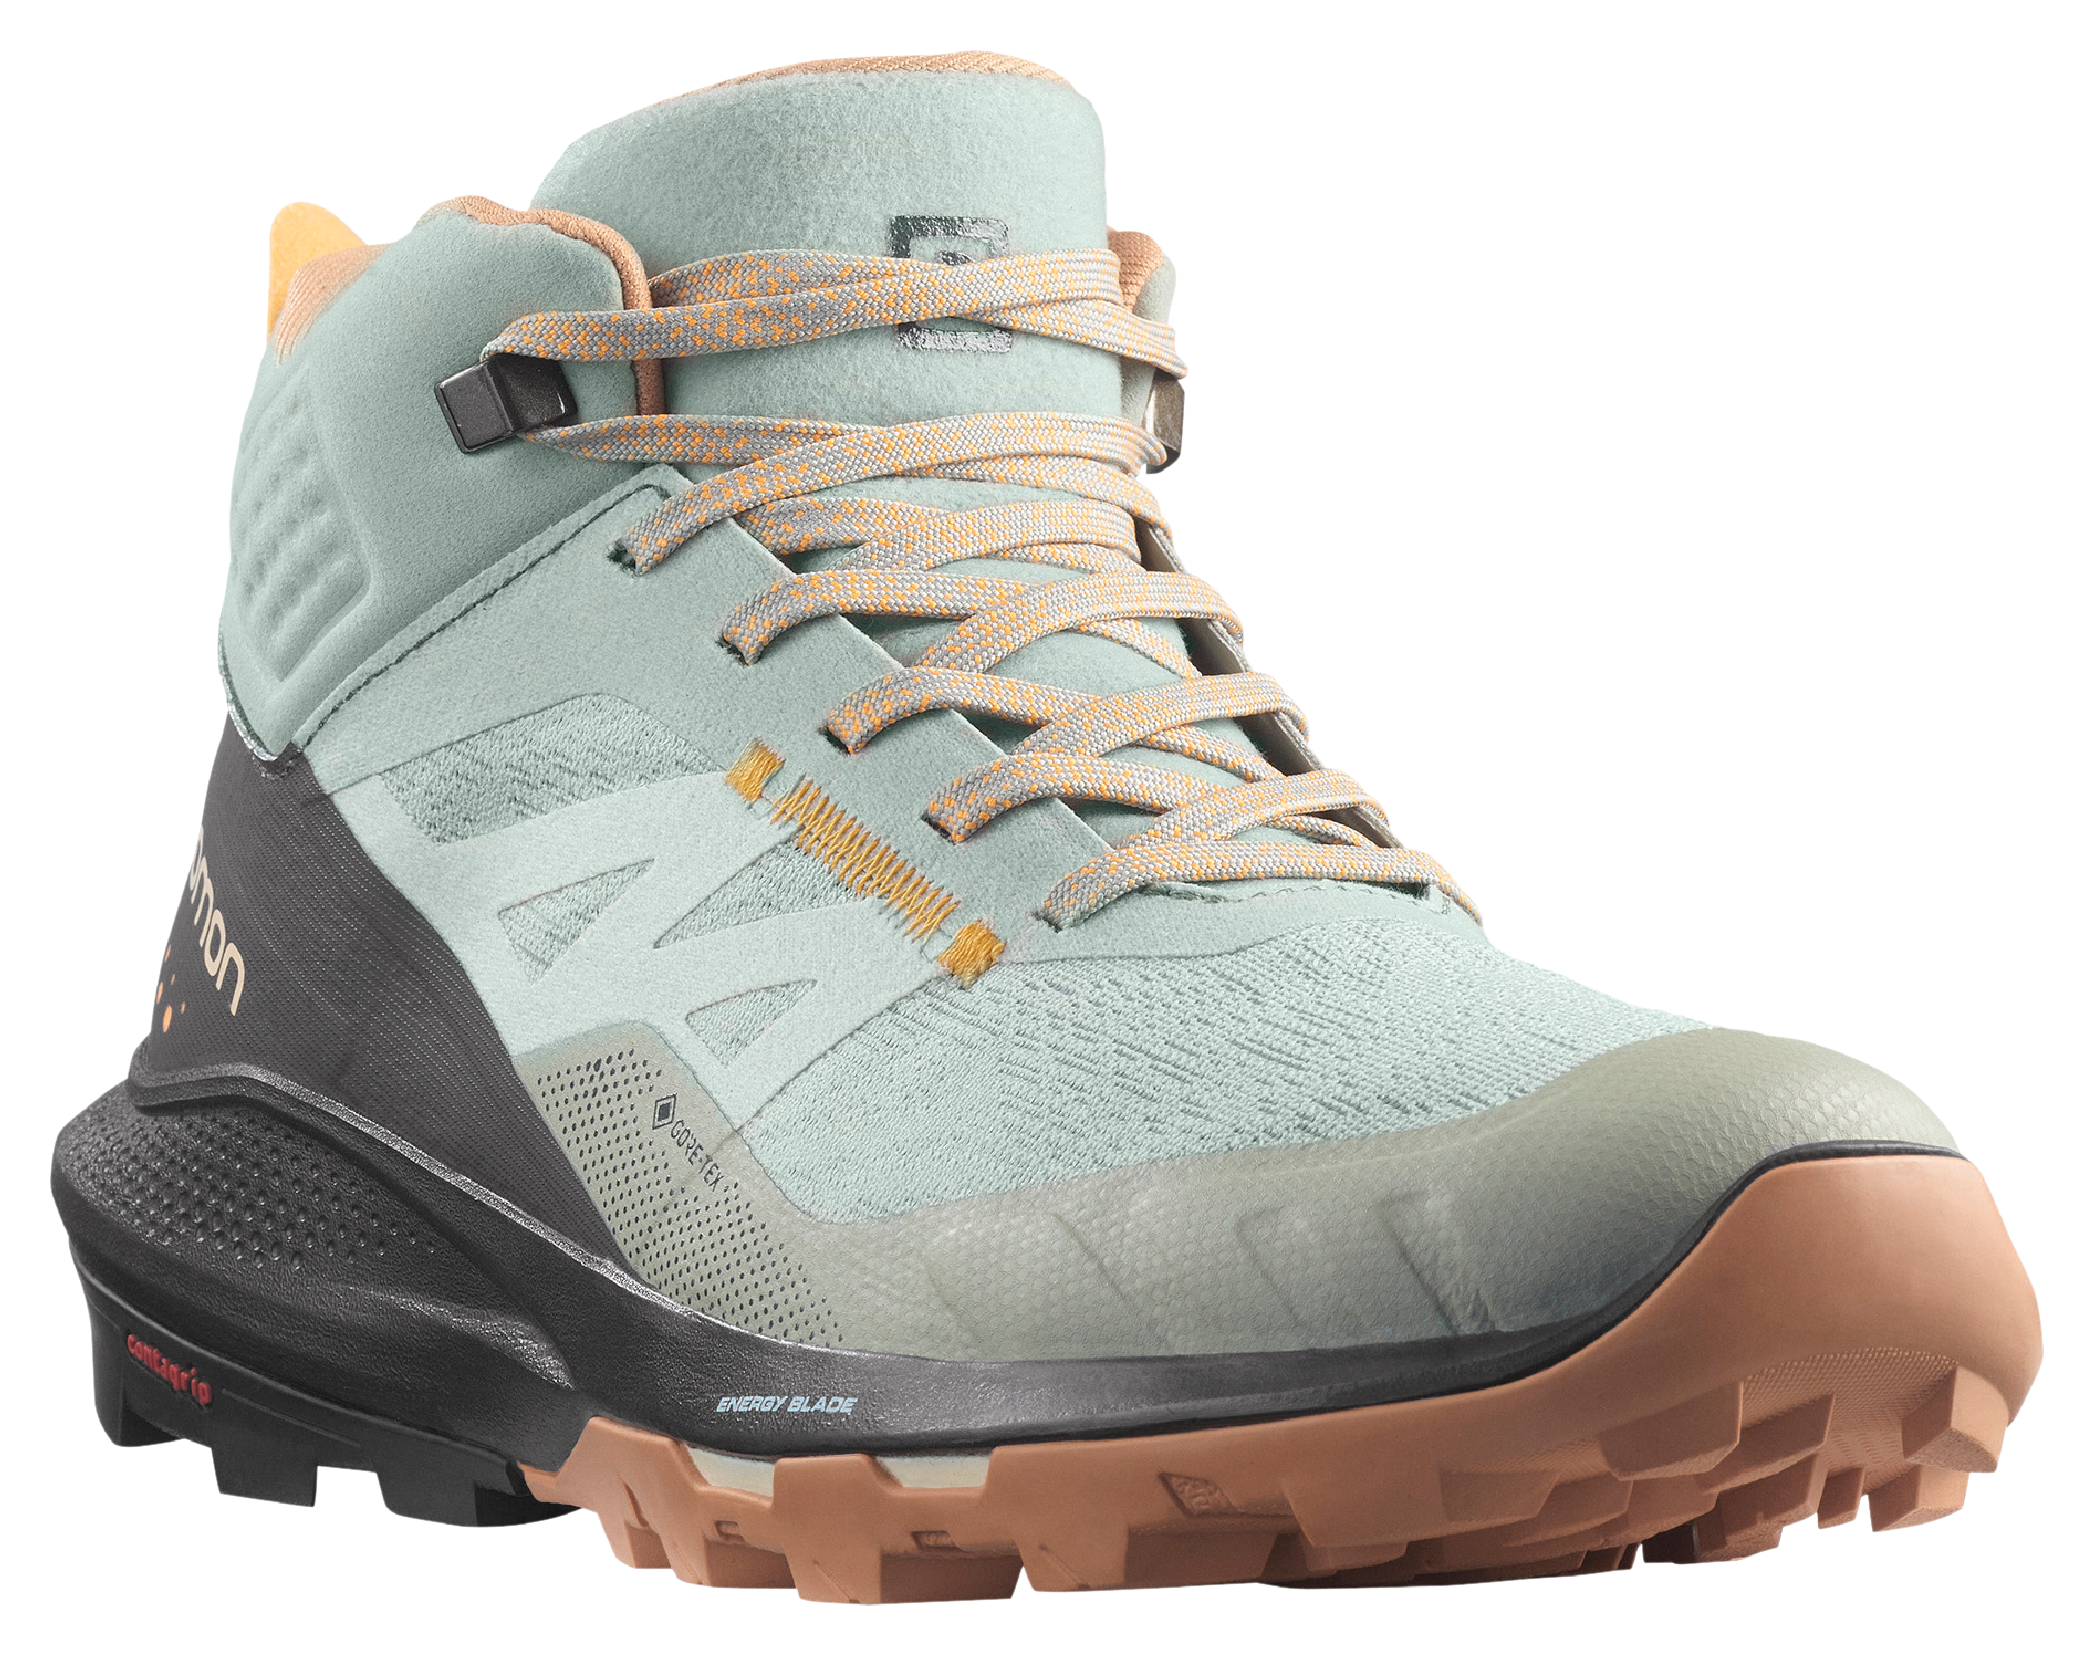 Salomon Outpulse Mid GORE-TEX Hiking Boots for Ladies - Wrought Iron/Ebony/Blaze Orange - 9M